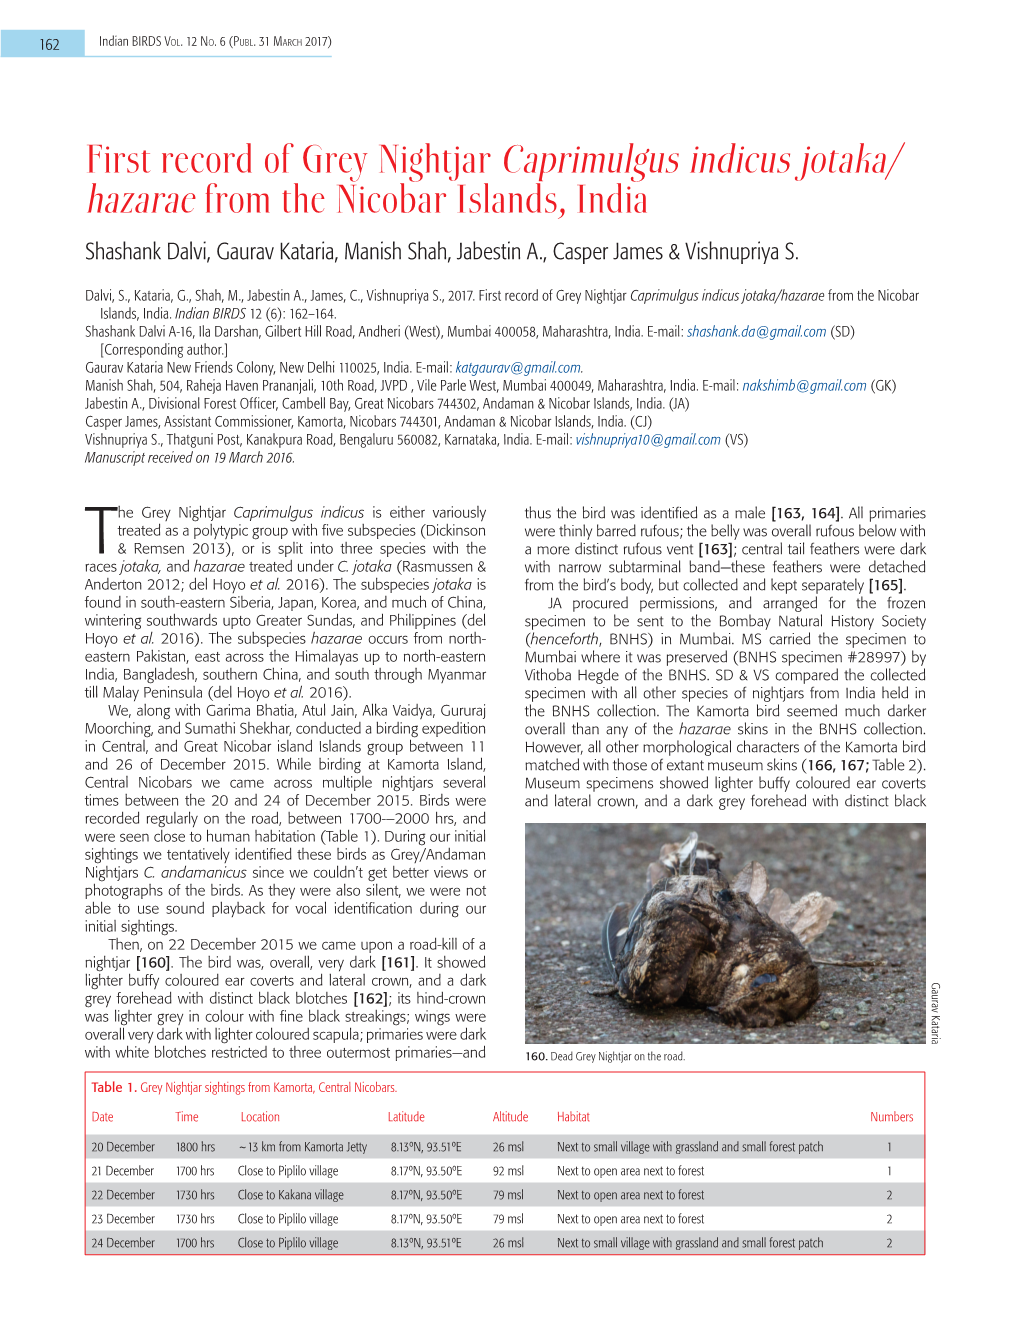 First Record of Grey Nightjar Caprimulgus Indicus Jotaka/ Hazarae from the Nicobar Islands, India